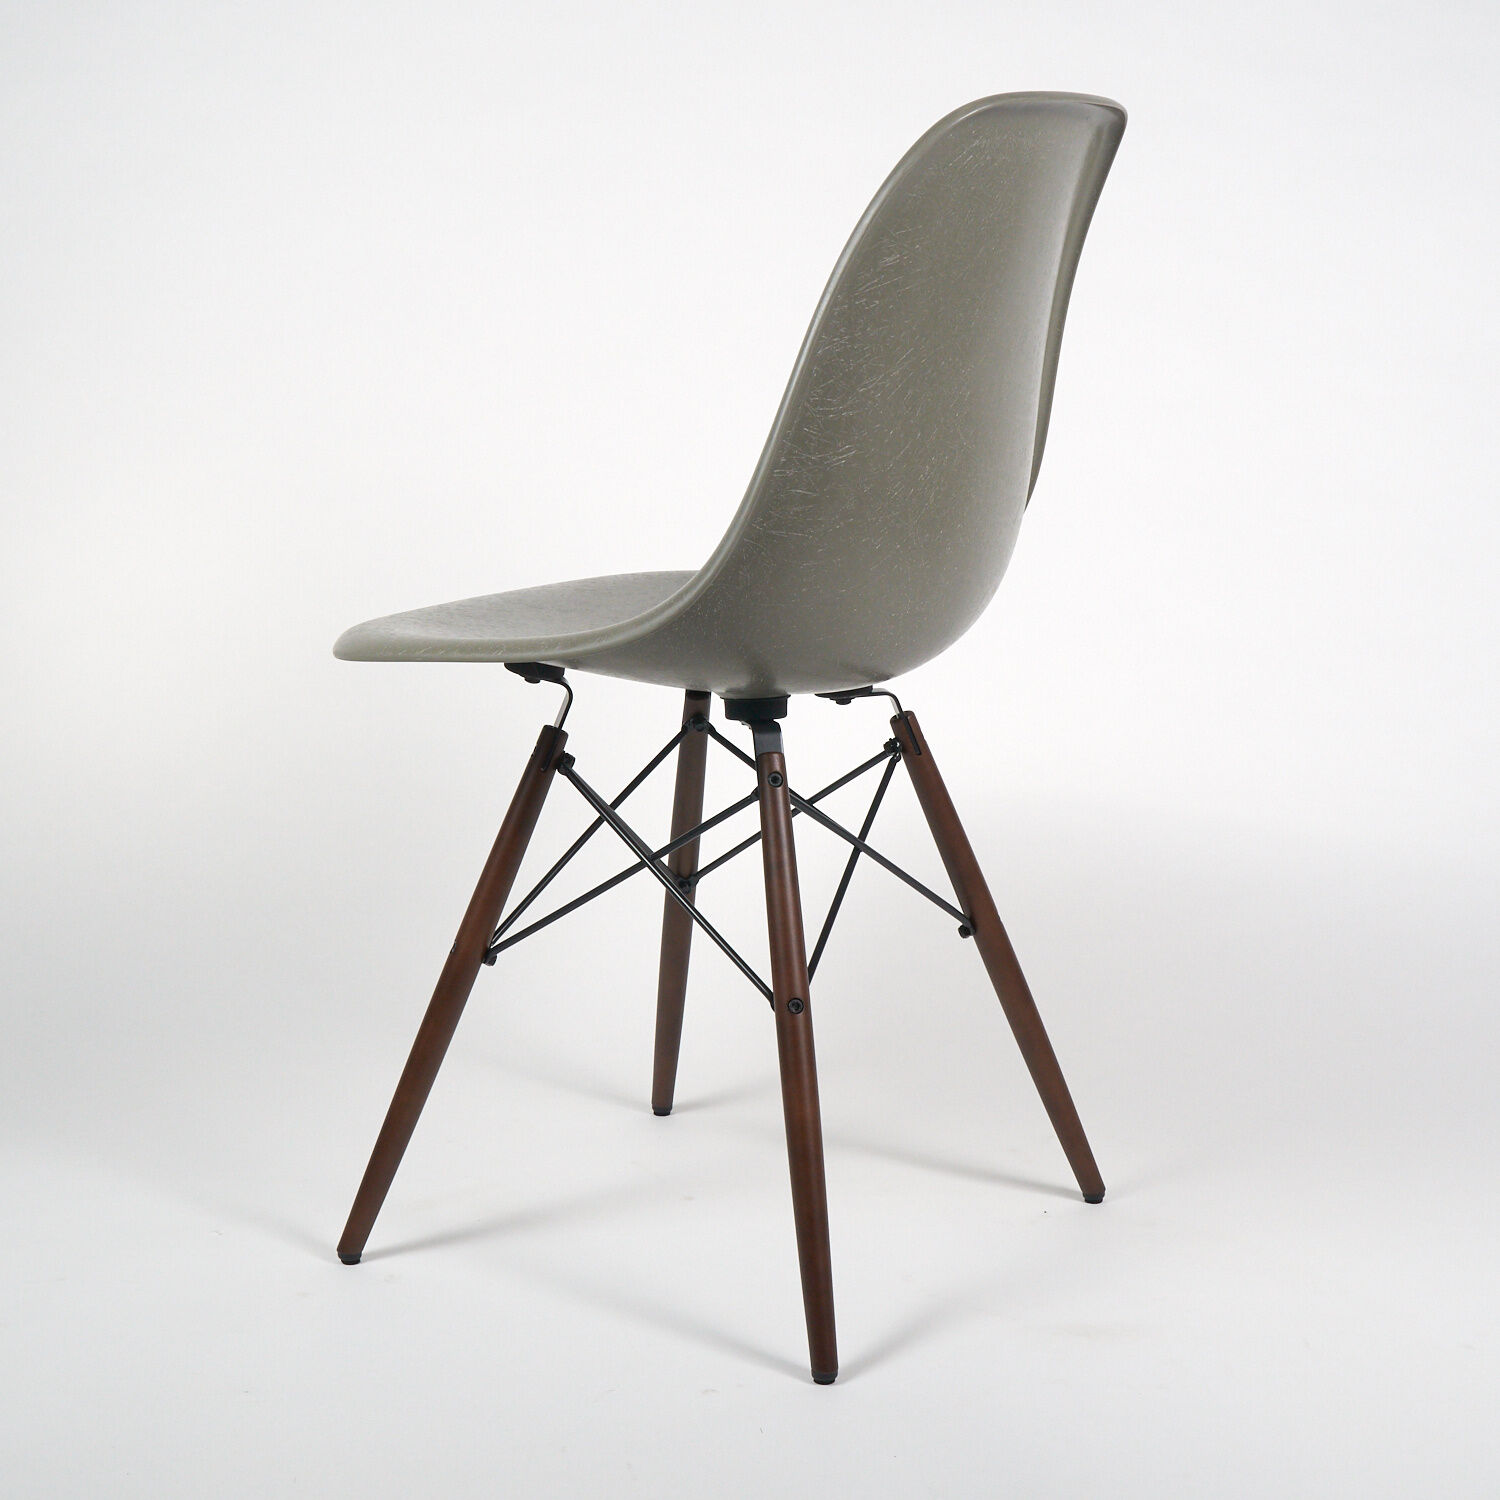 vitra-stuhl-eames-fiberglass-side-chair-dsw-raw-umber-grau-holzgestellt-ahorn-dunkel-mf-0004558-001